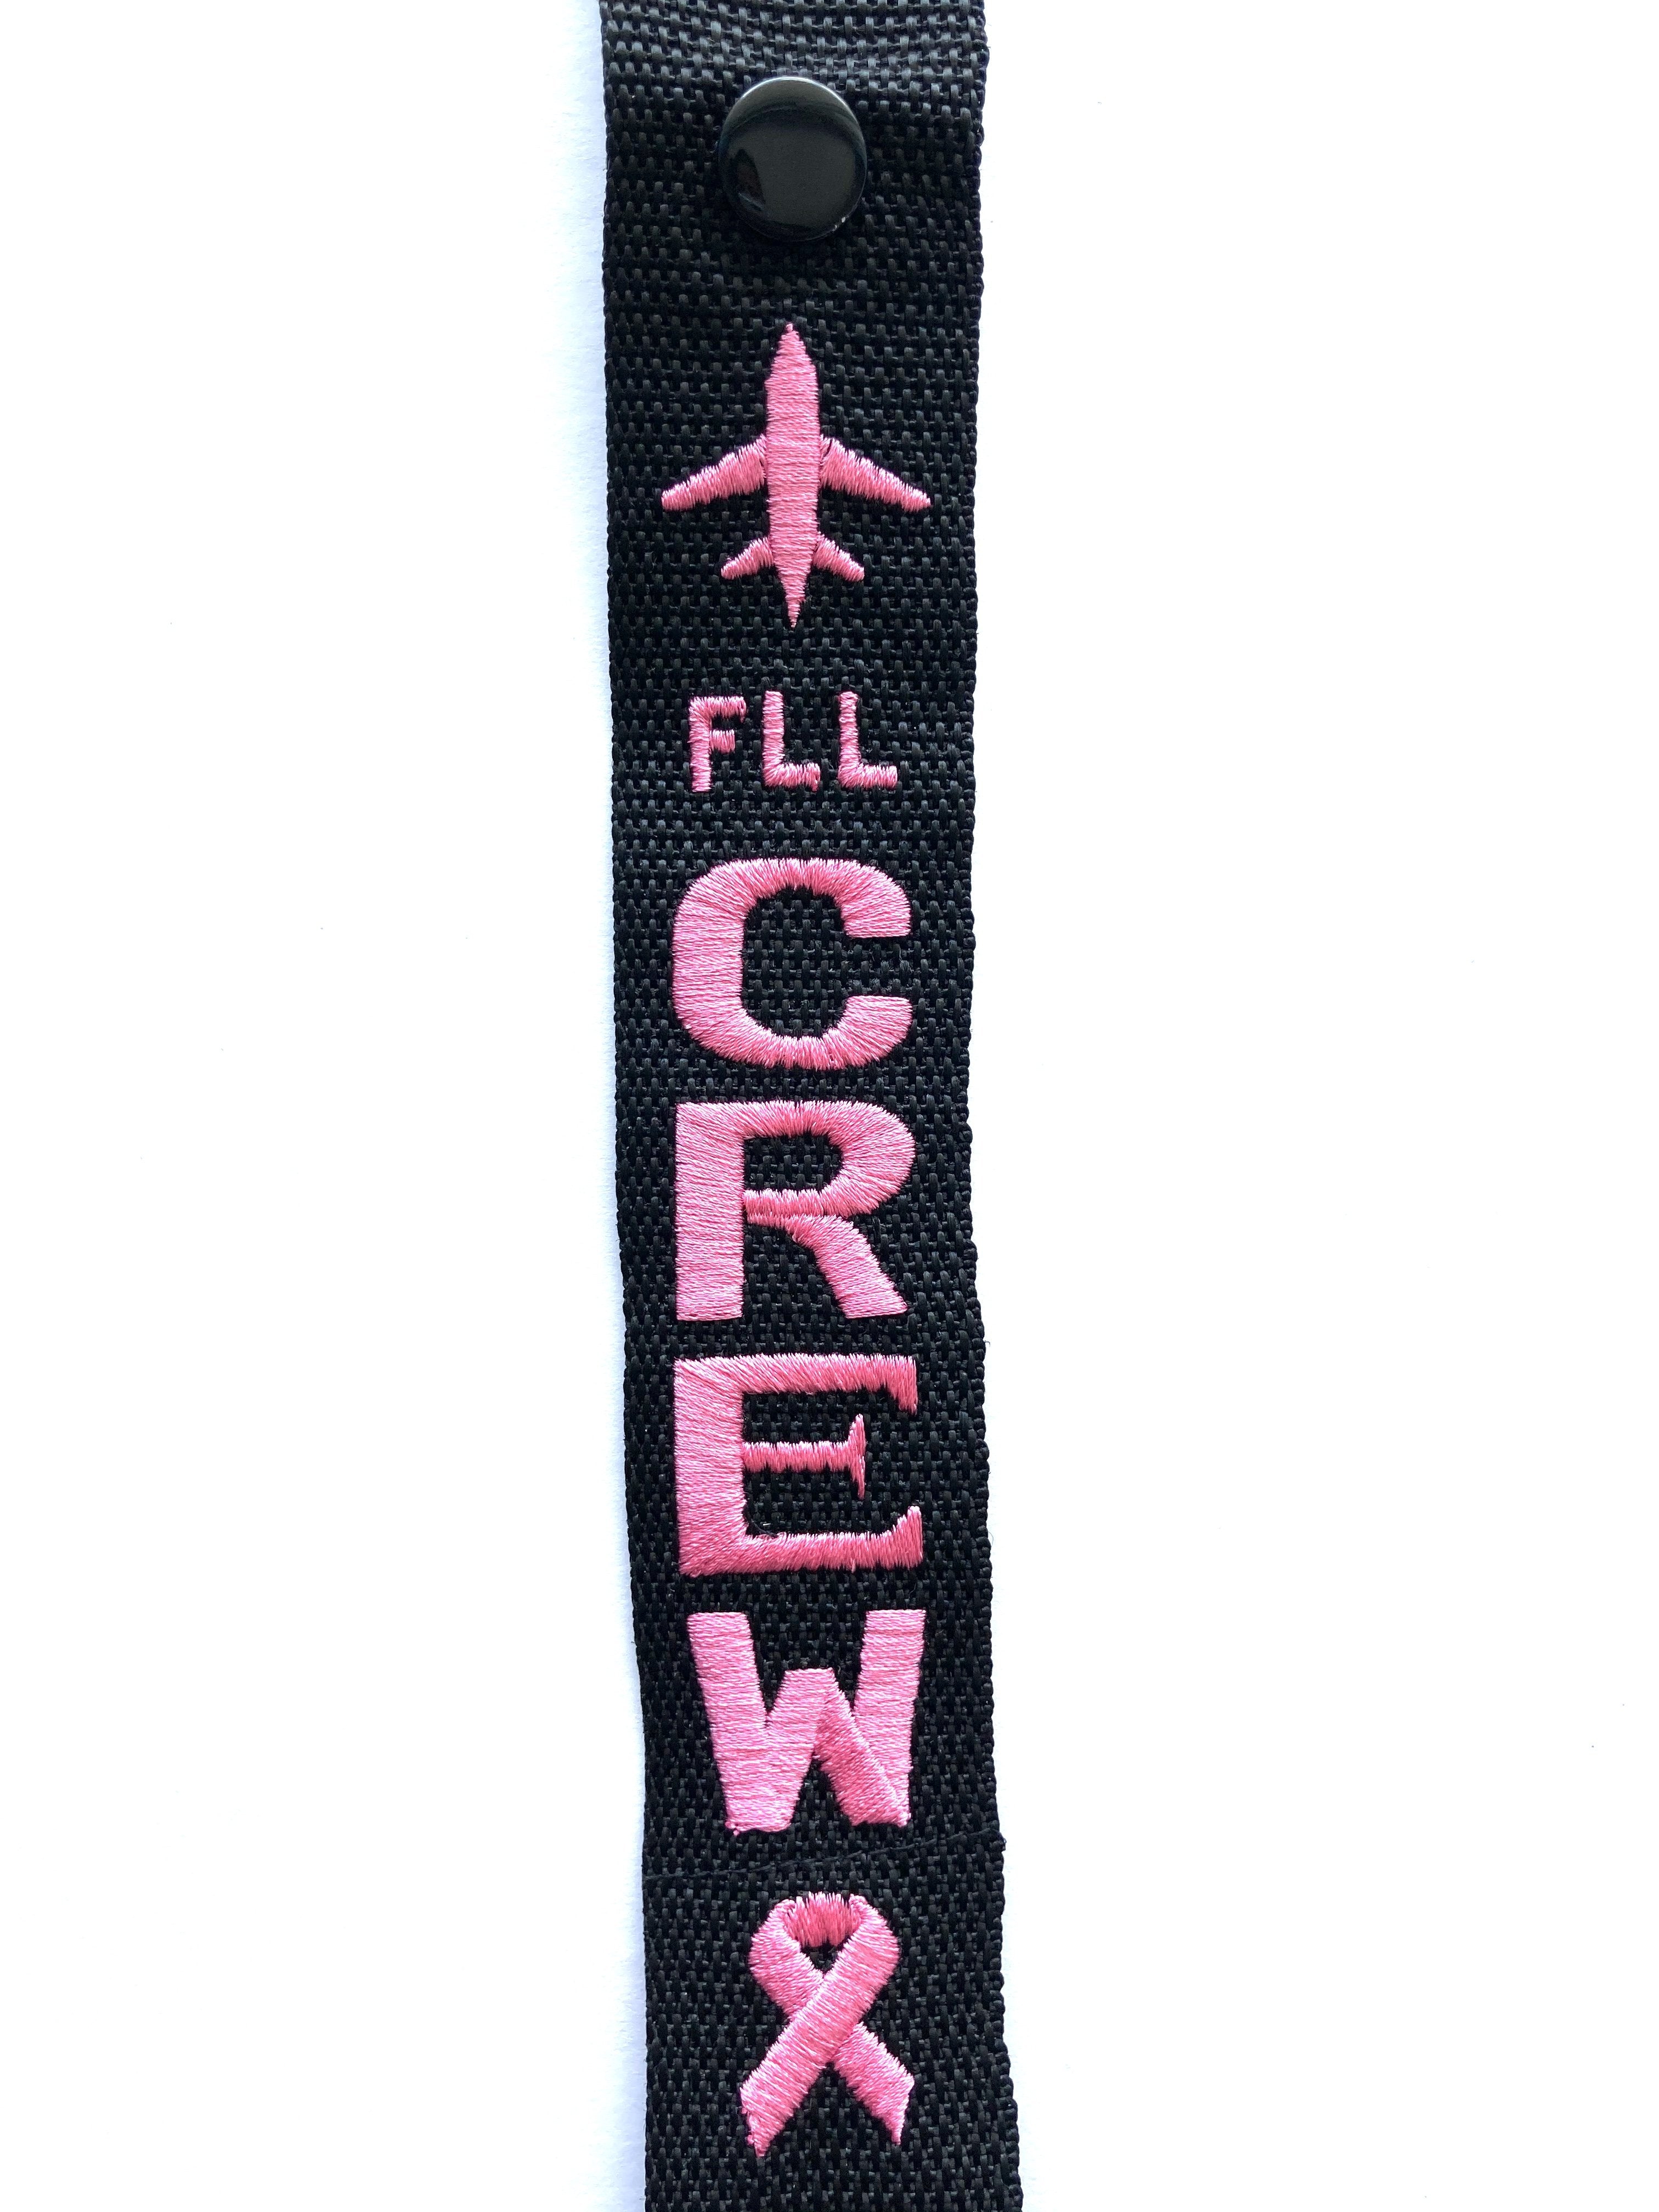 CREW Luggage Tag - FLL Pink &